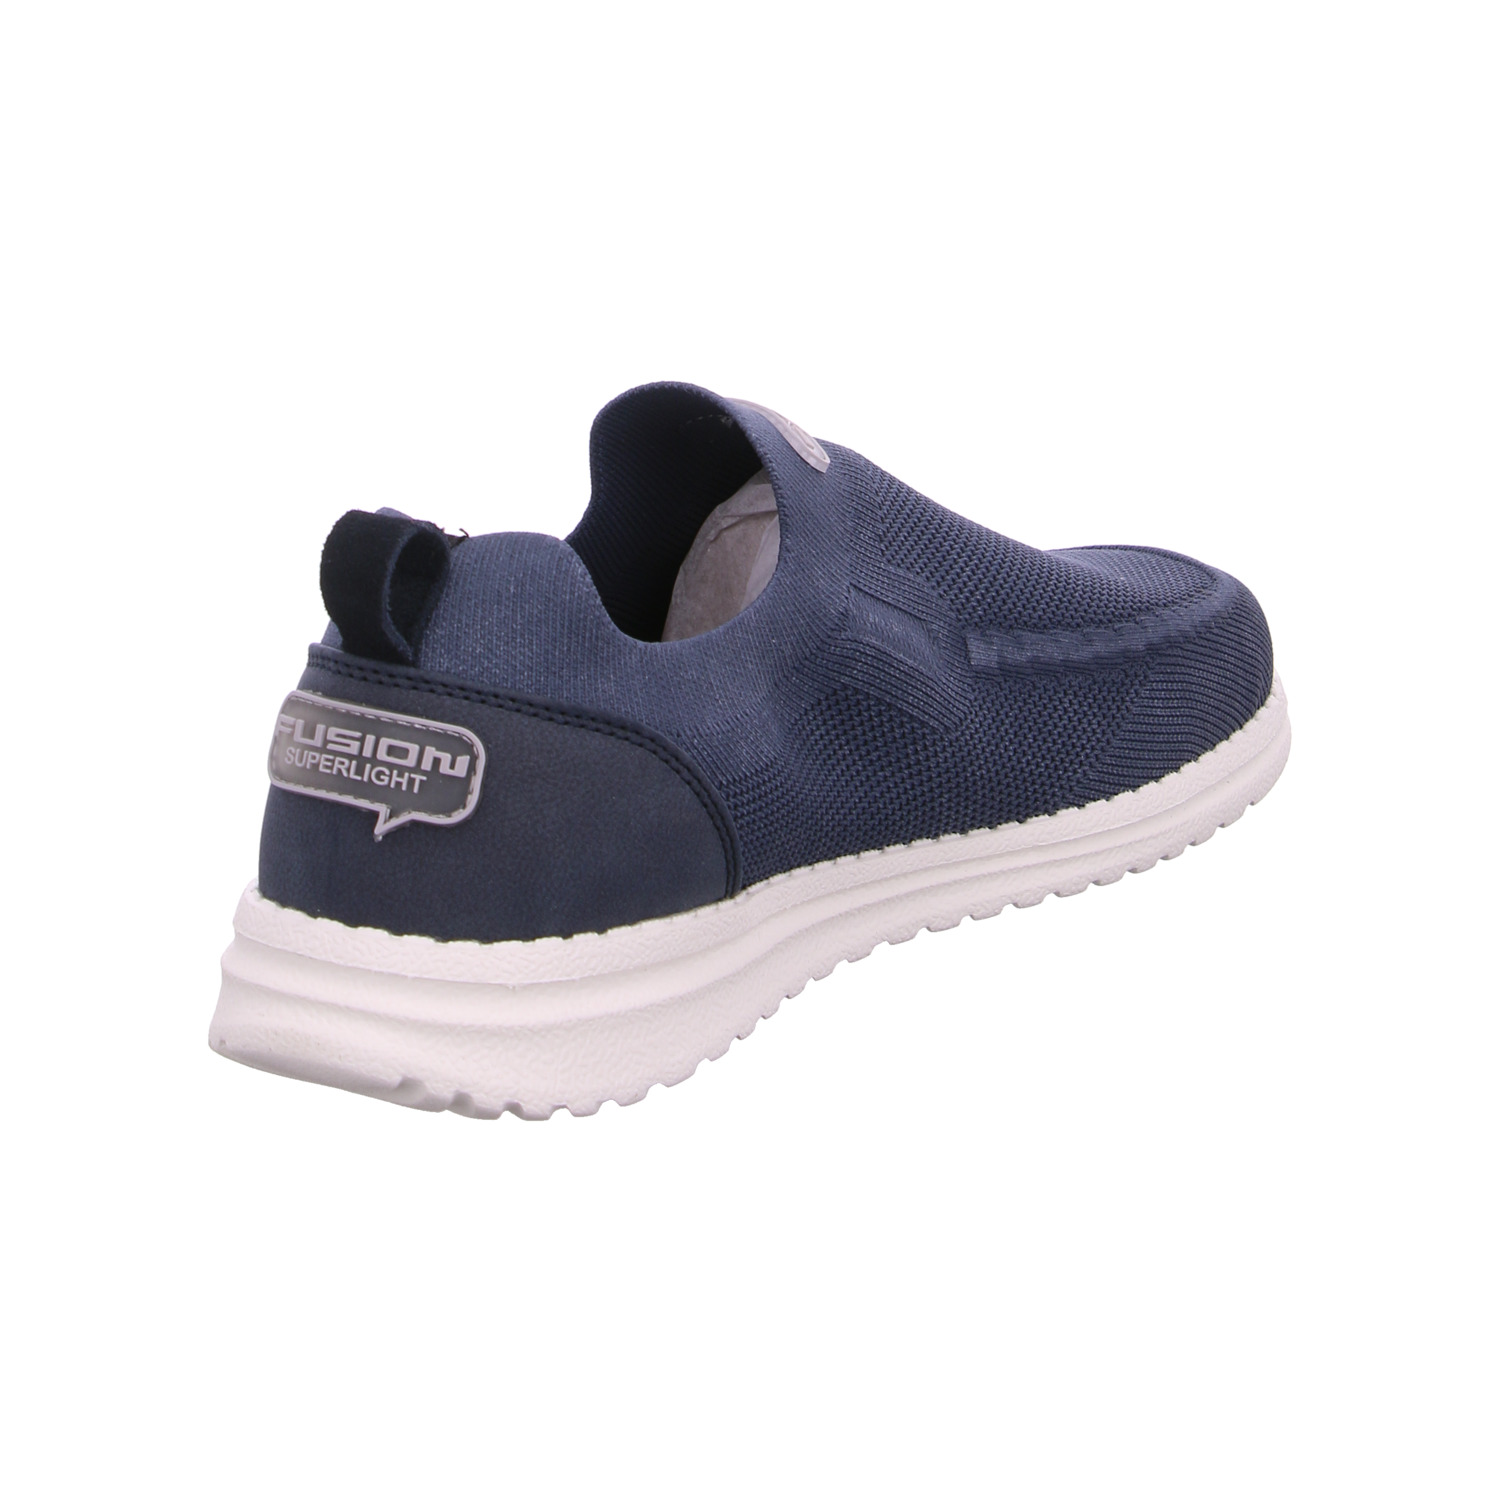 fusion-slipper-blau-124120-40